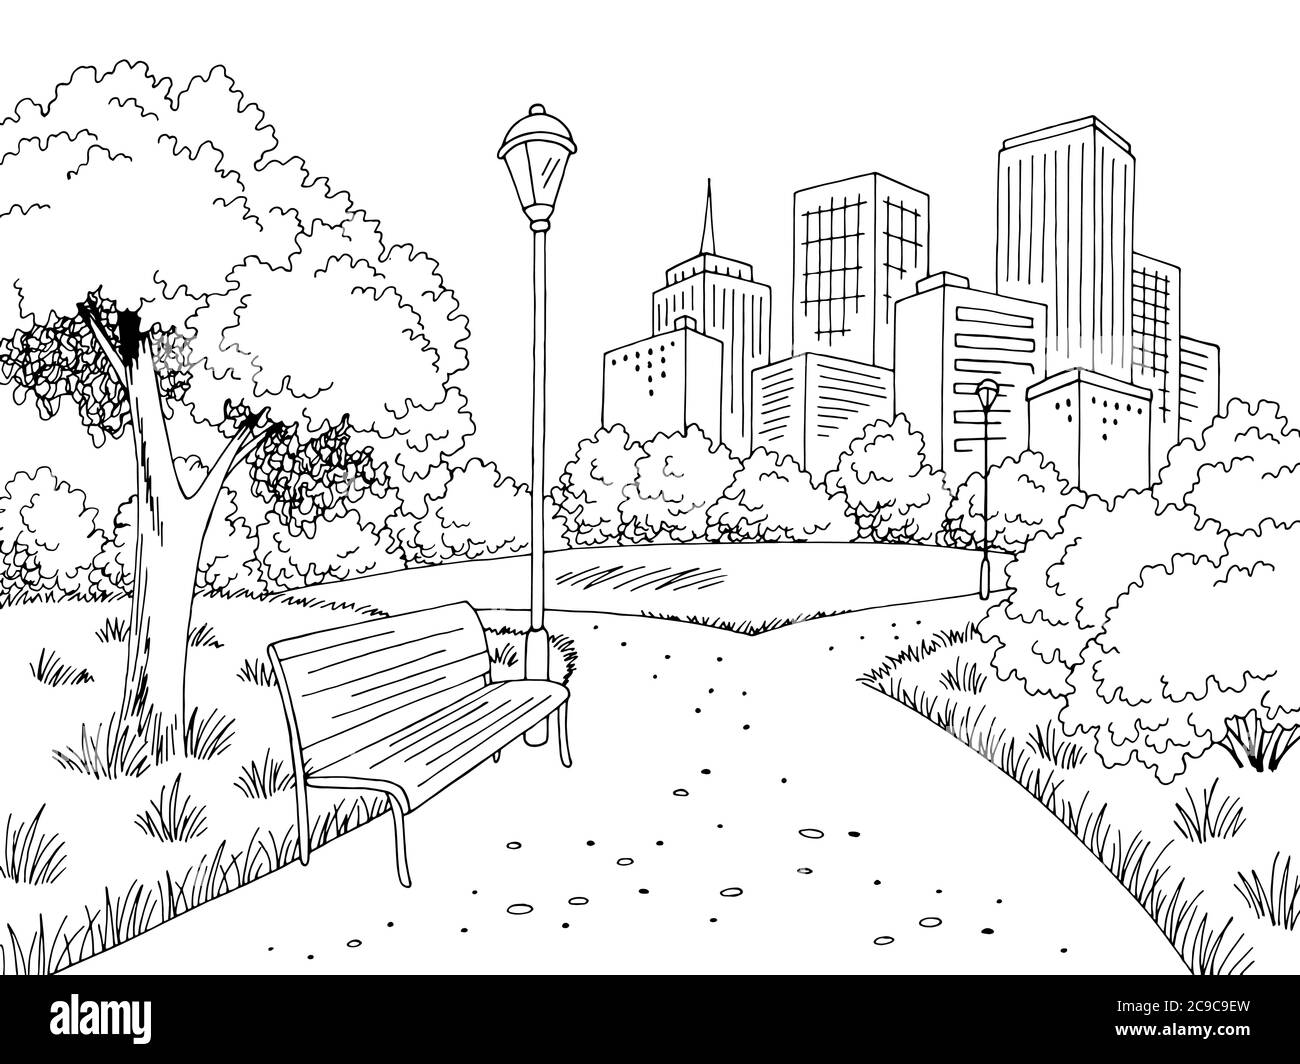 Park Grafik schwarz weiß Stadt Landschaft Skizze Illustration Vektor Stock Vektor